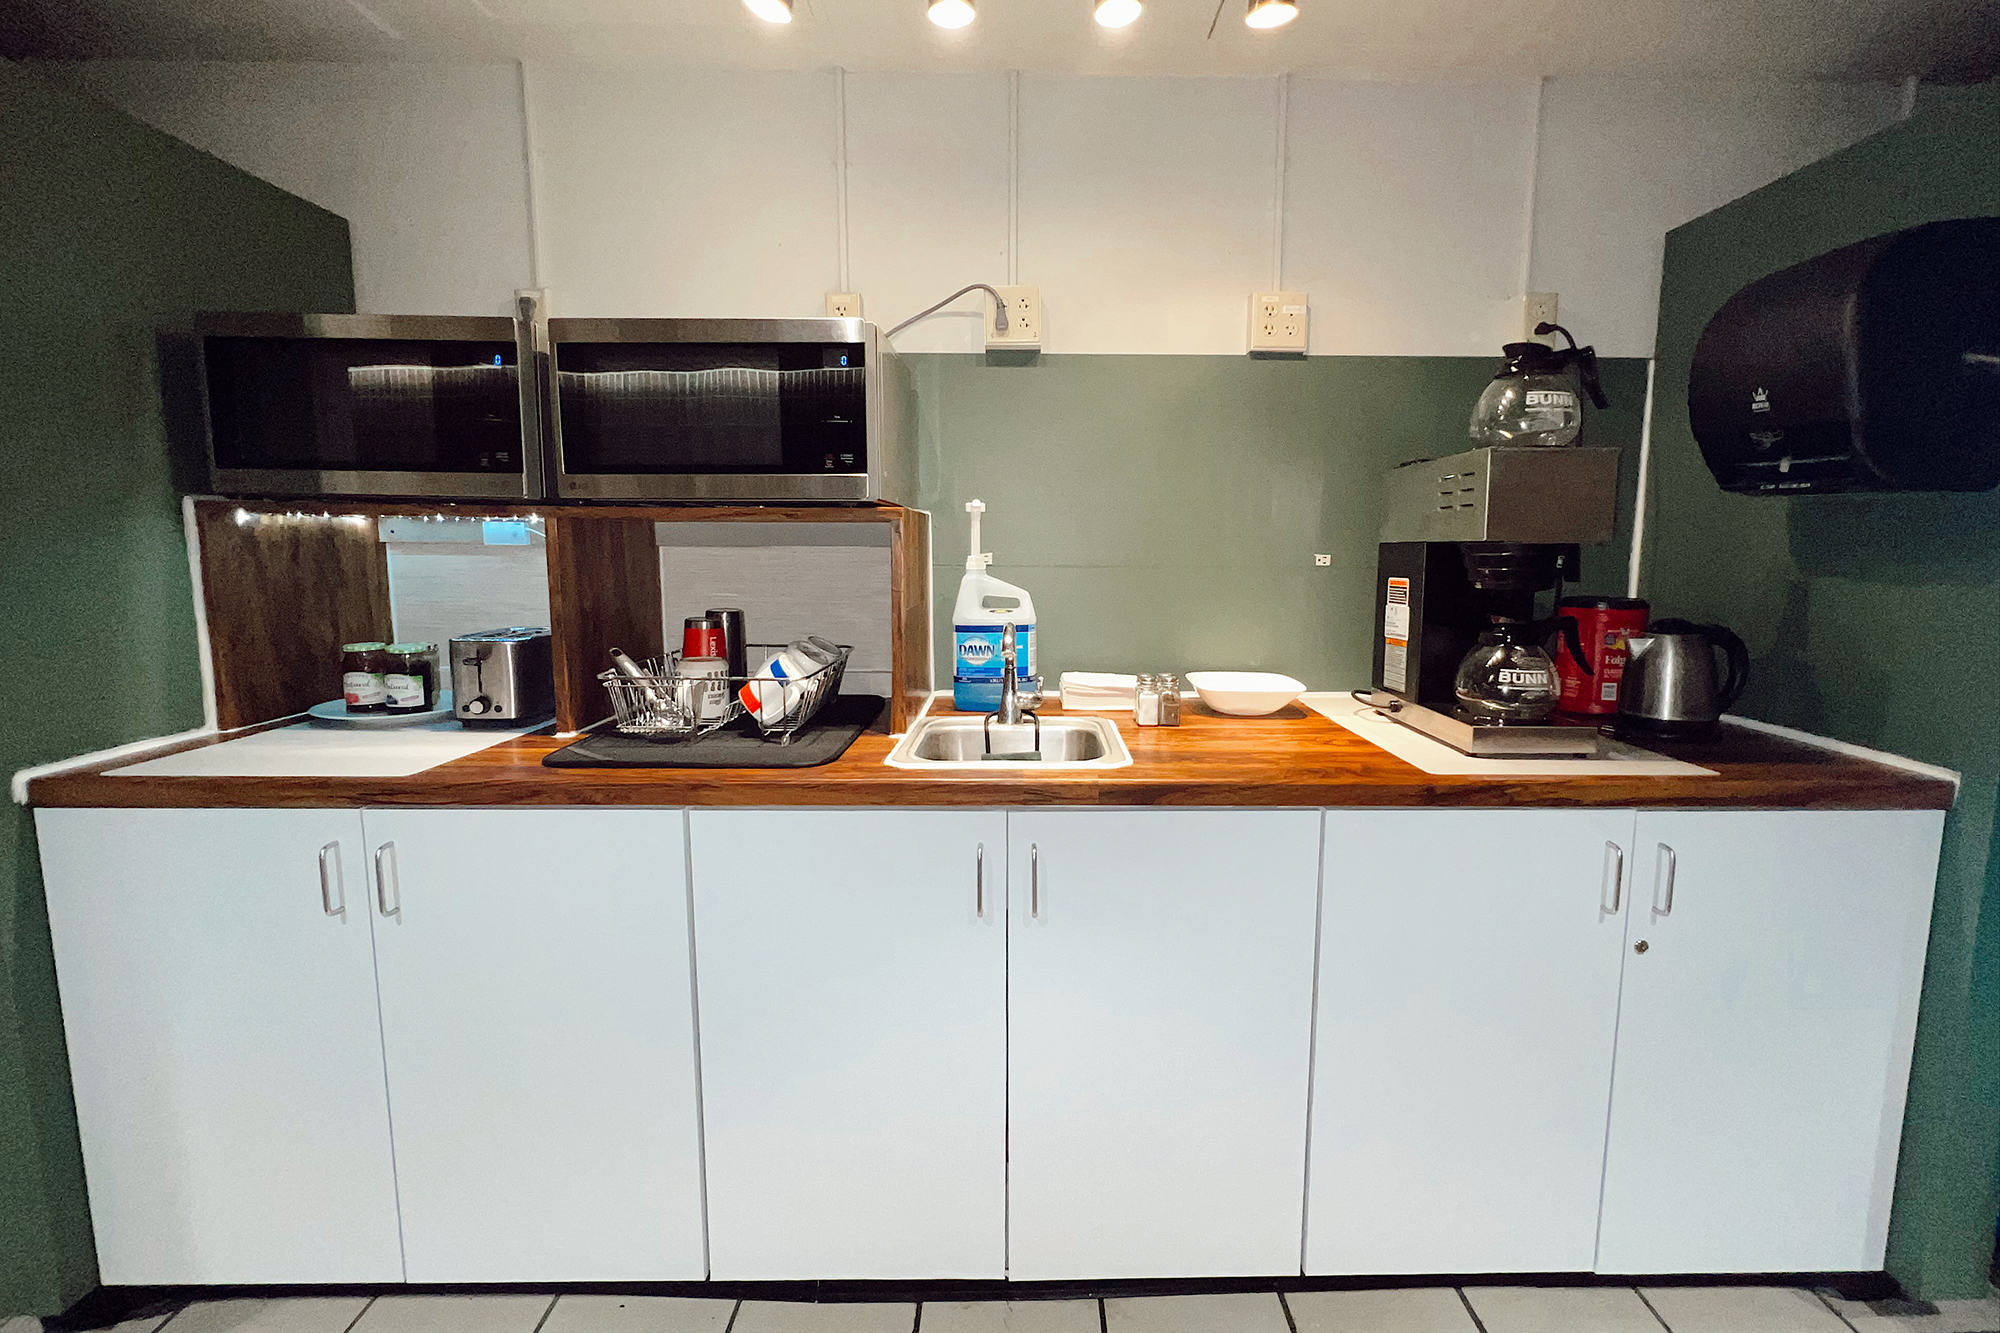 a clean kitchen area